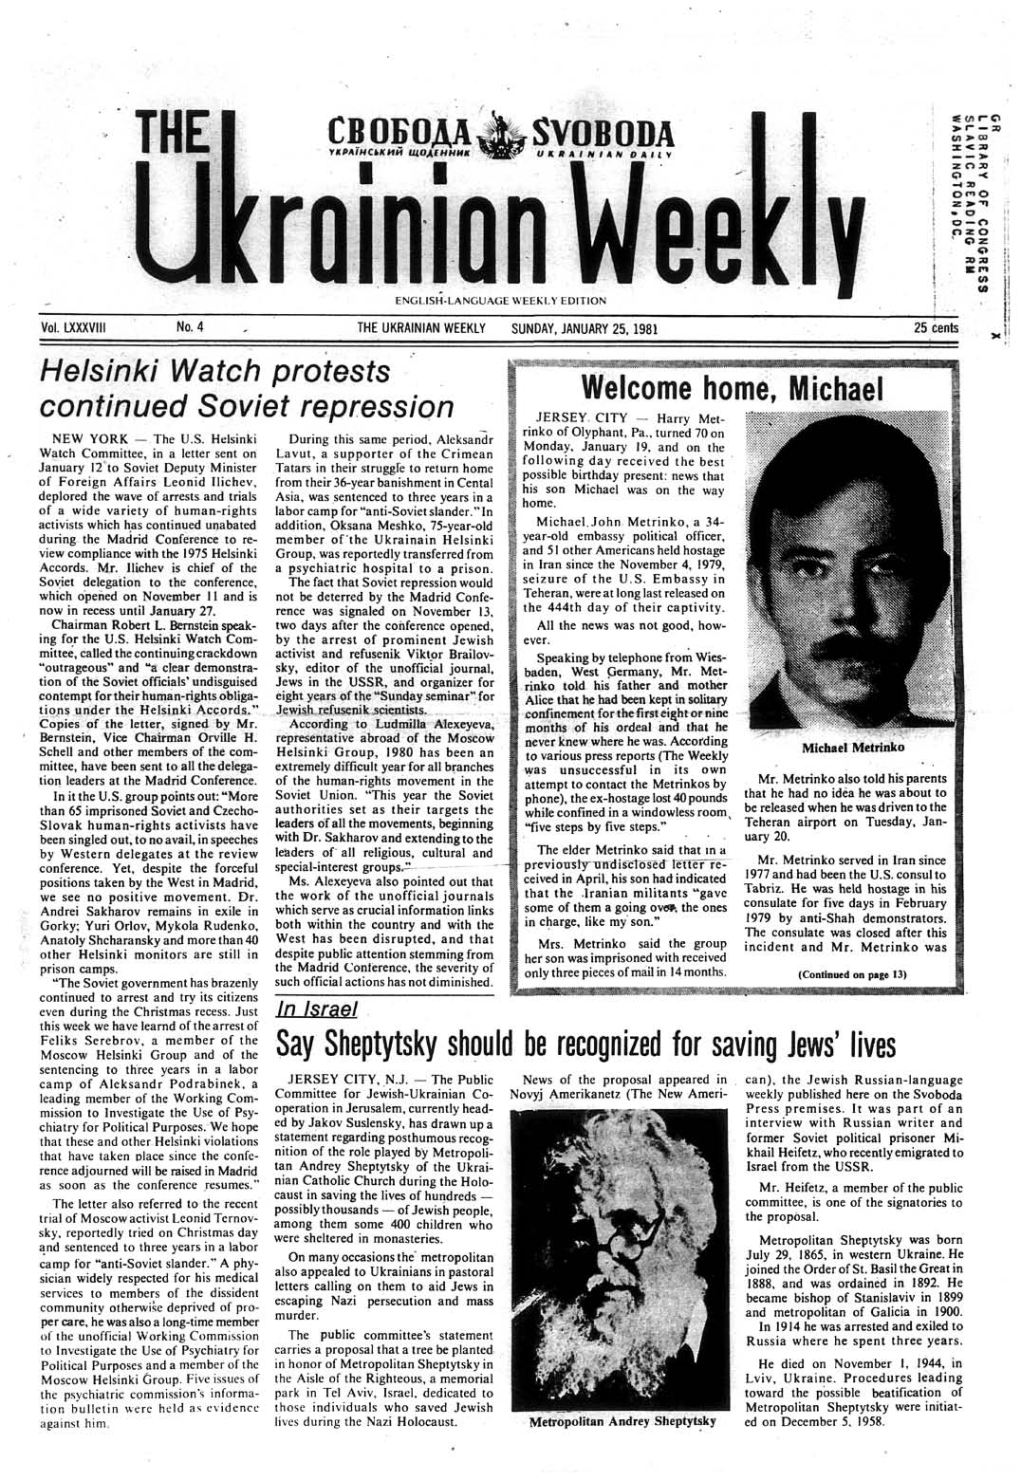 The Ukrainian Weekly 1981, No.4